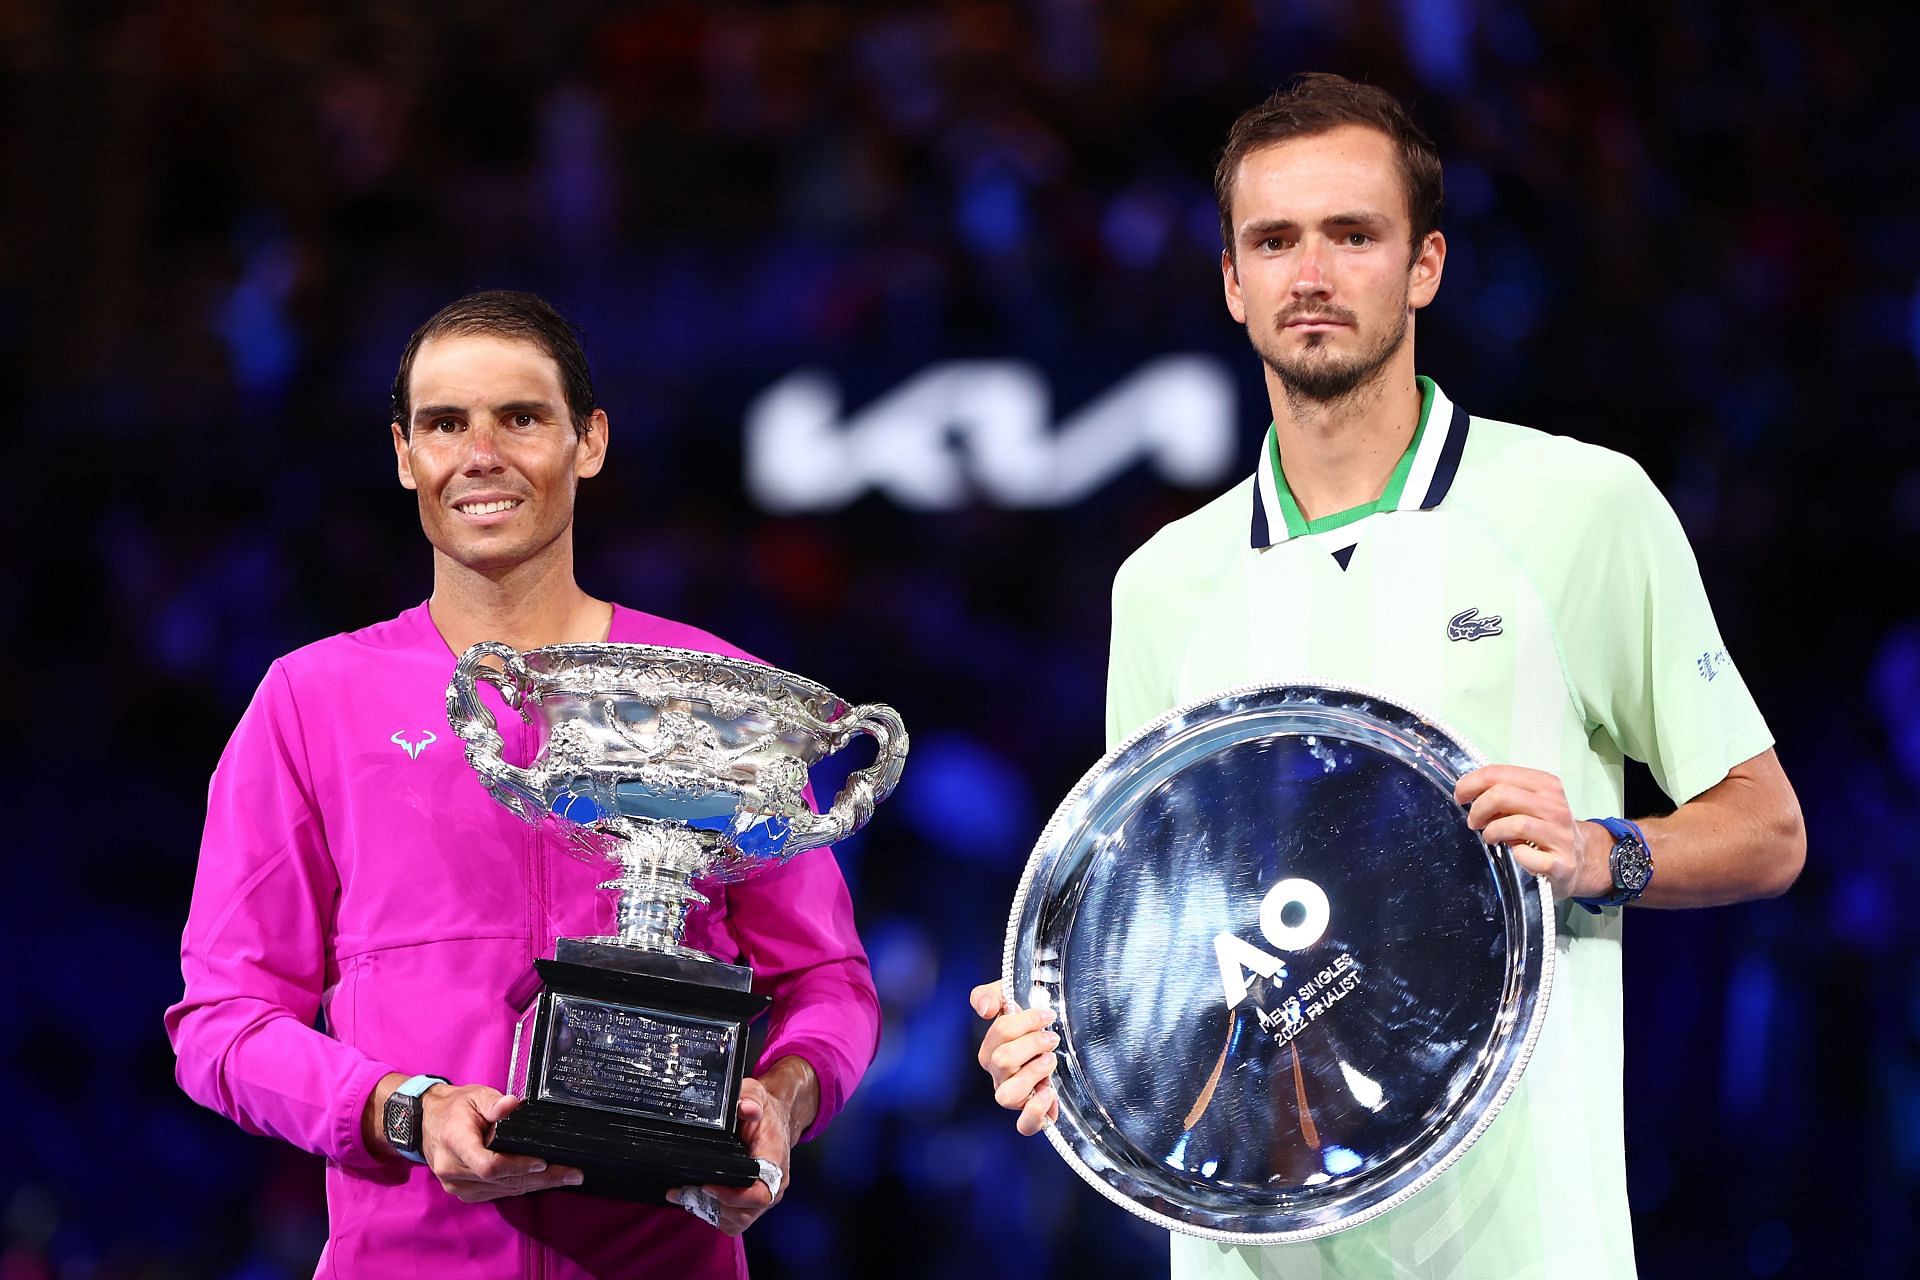 Rafael Nadal and Daniil Medvedev at the 2022 Australian Open.